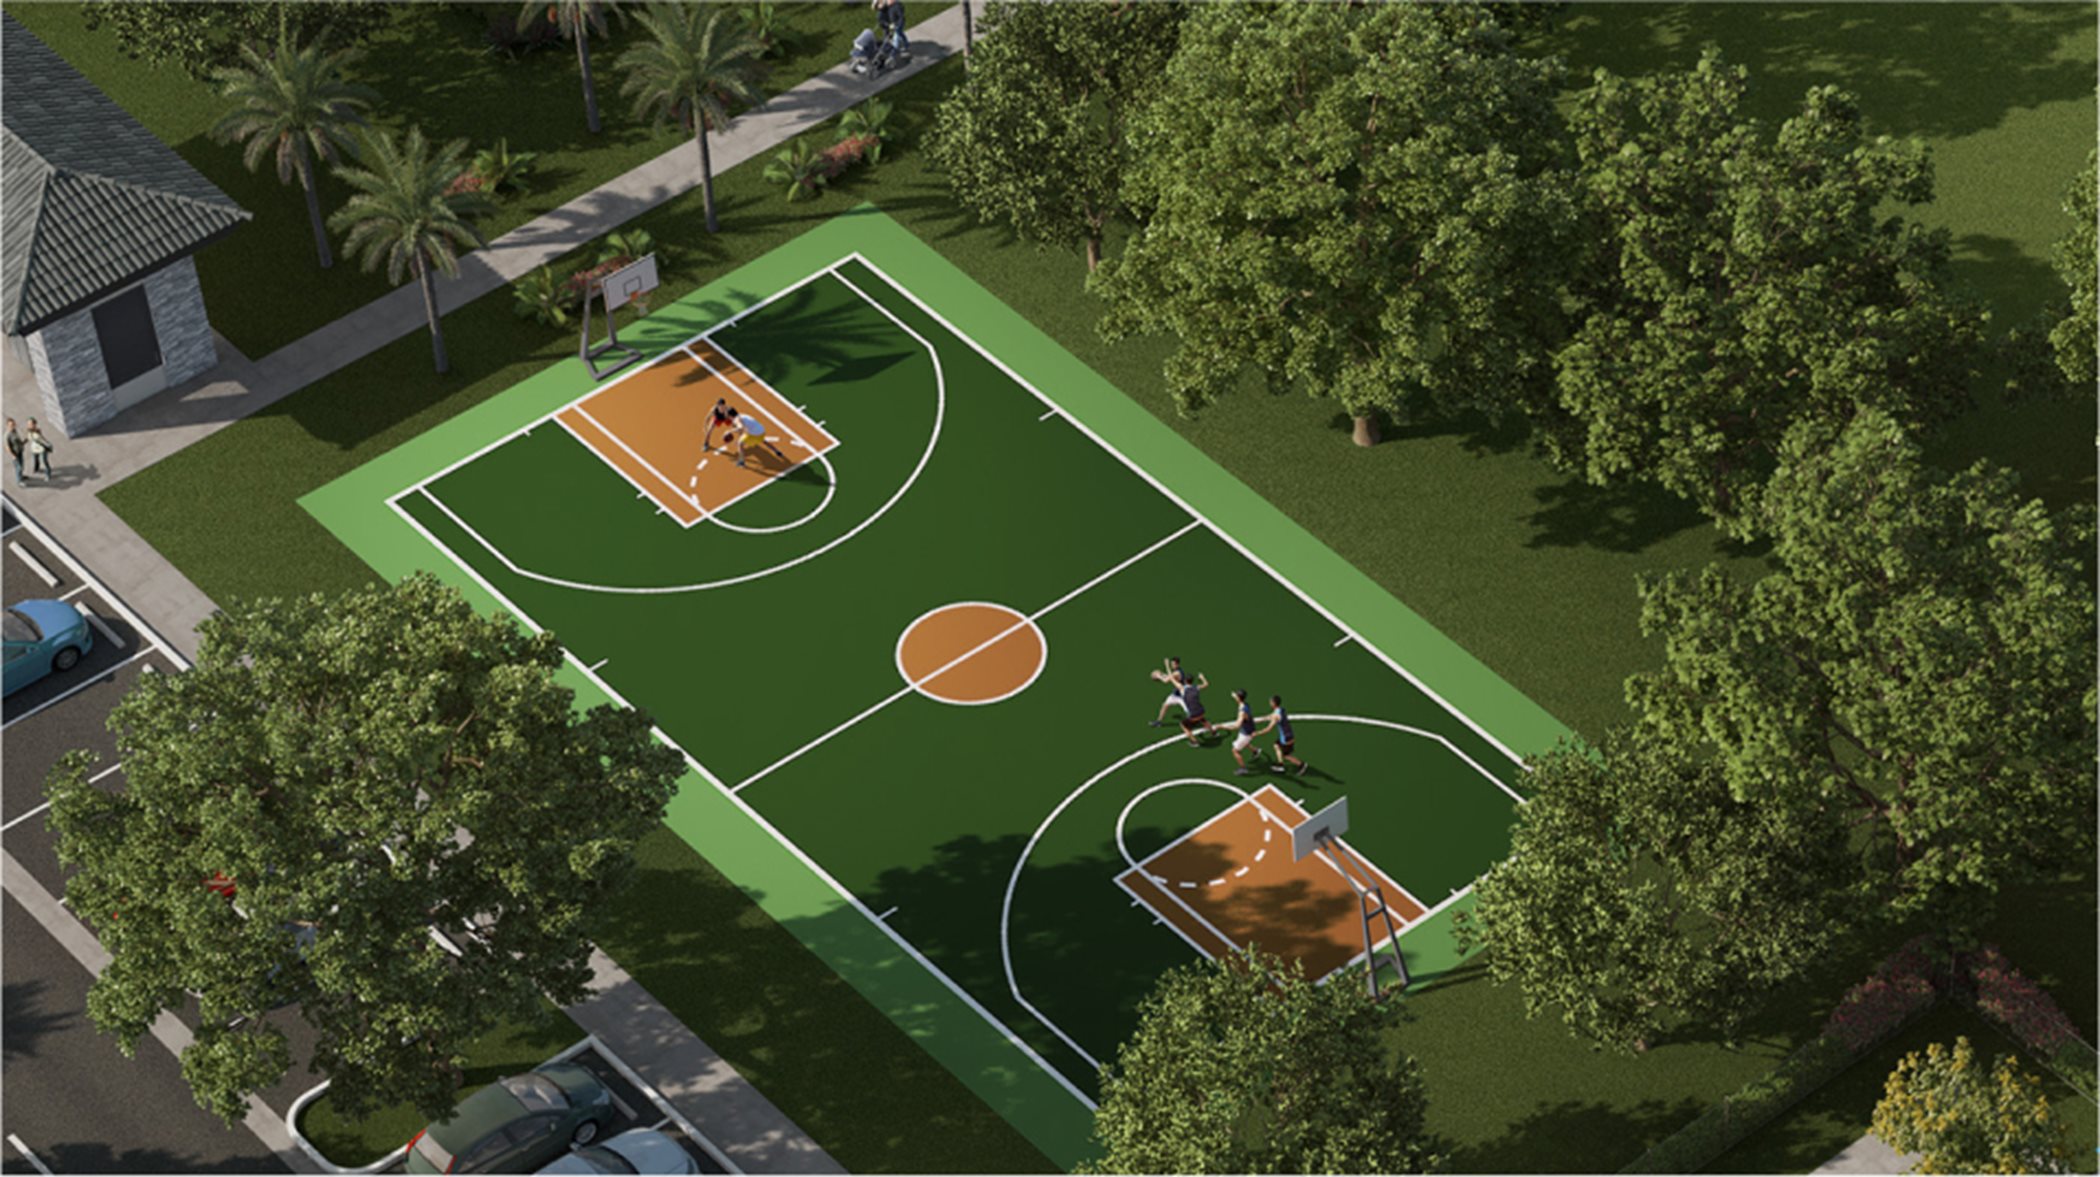 Terra Sol basketball court amenity